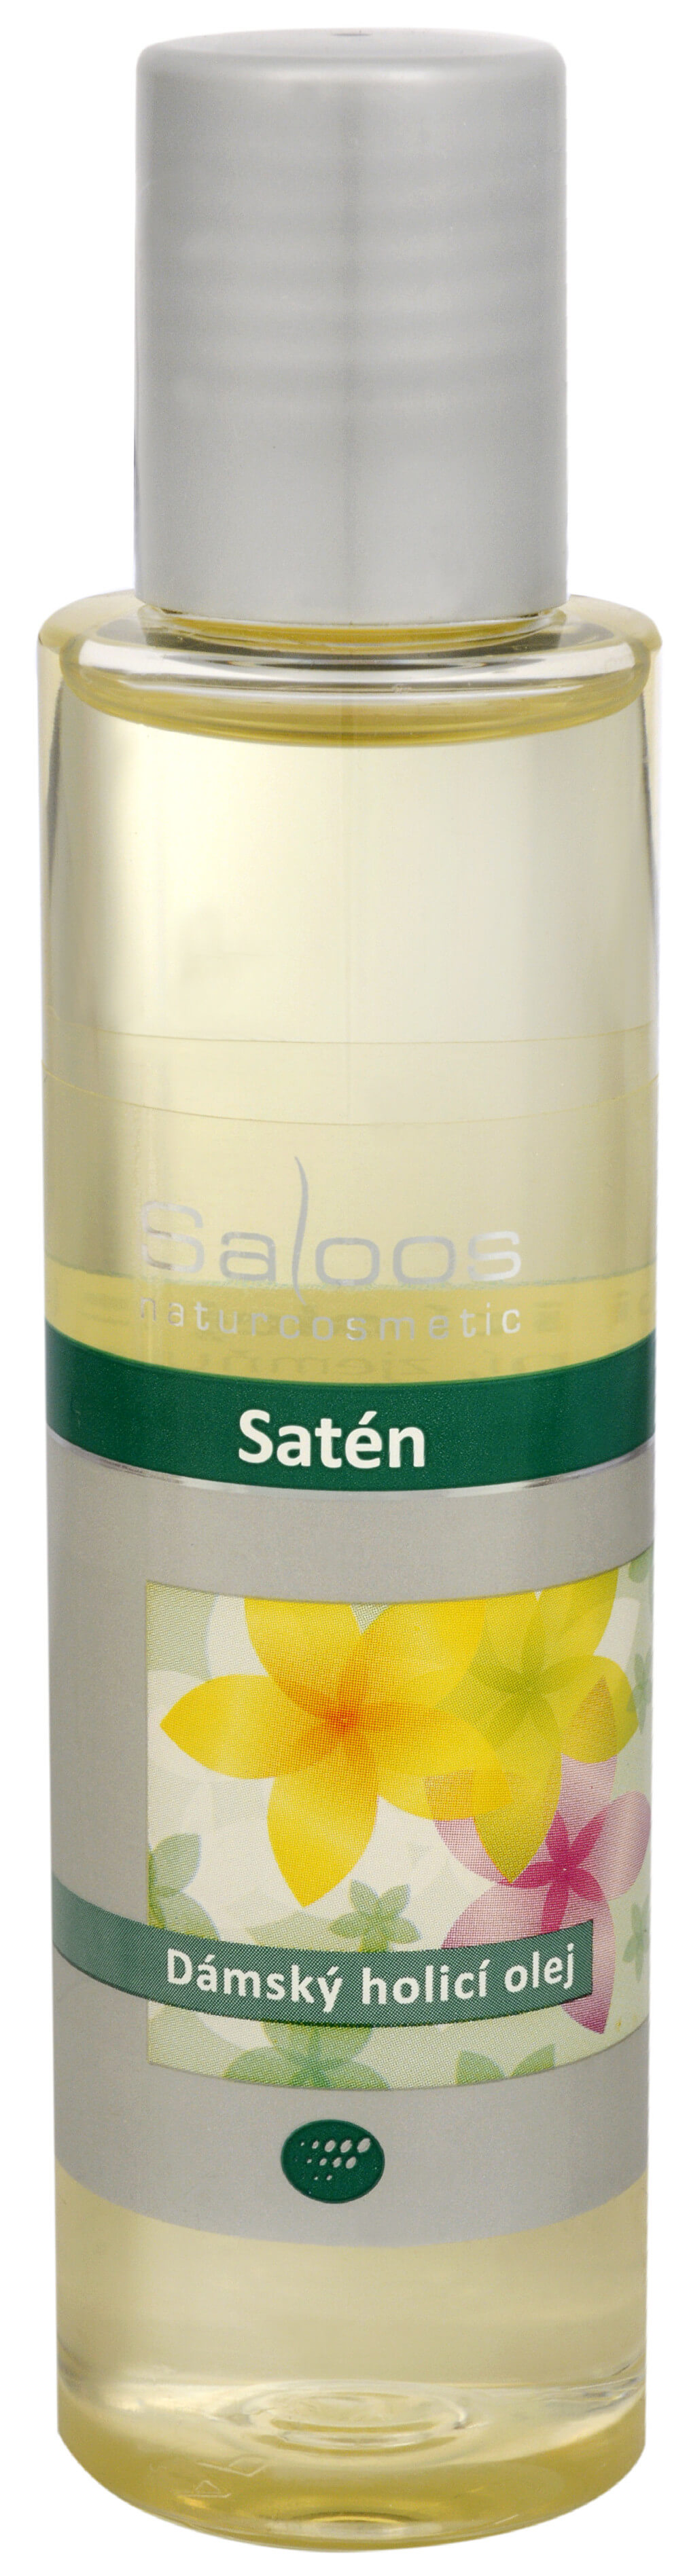 Saloos Satén - dámský holicí olej 250 ml